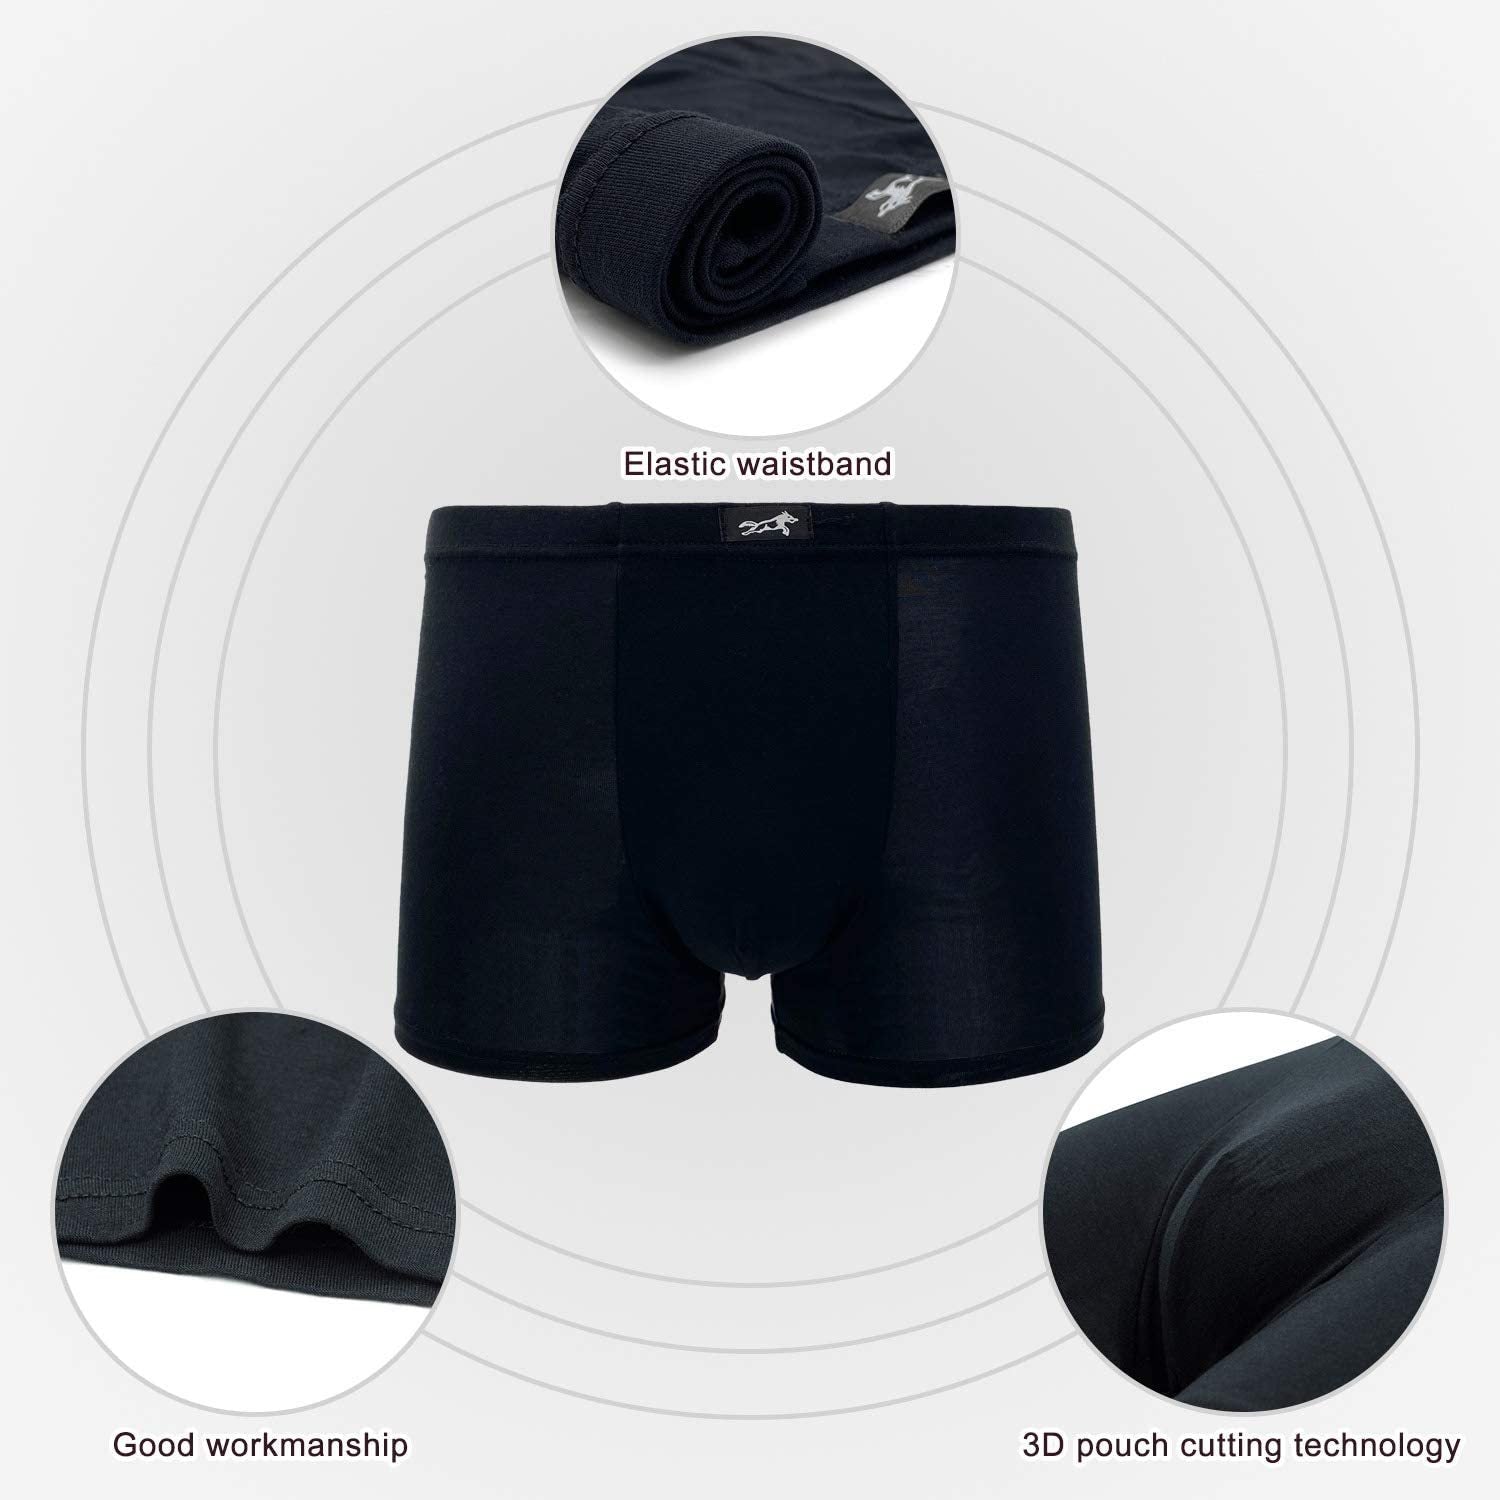 NXY Men's Breathable 7-Pack Underwear Boxer Briefs Cotton Trunks